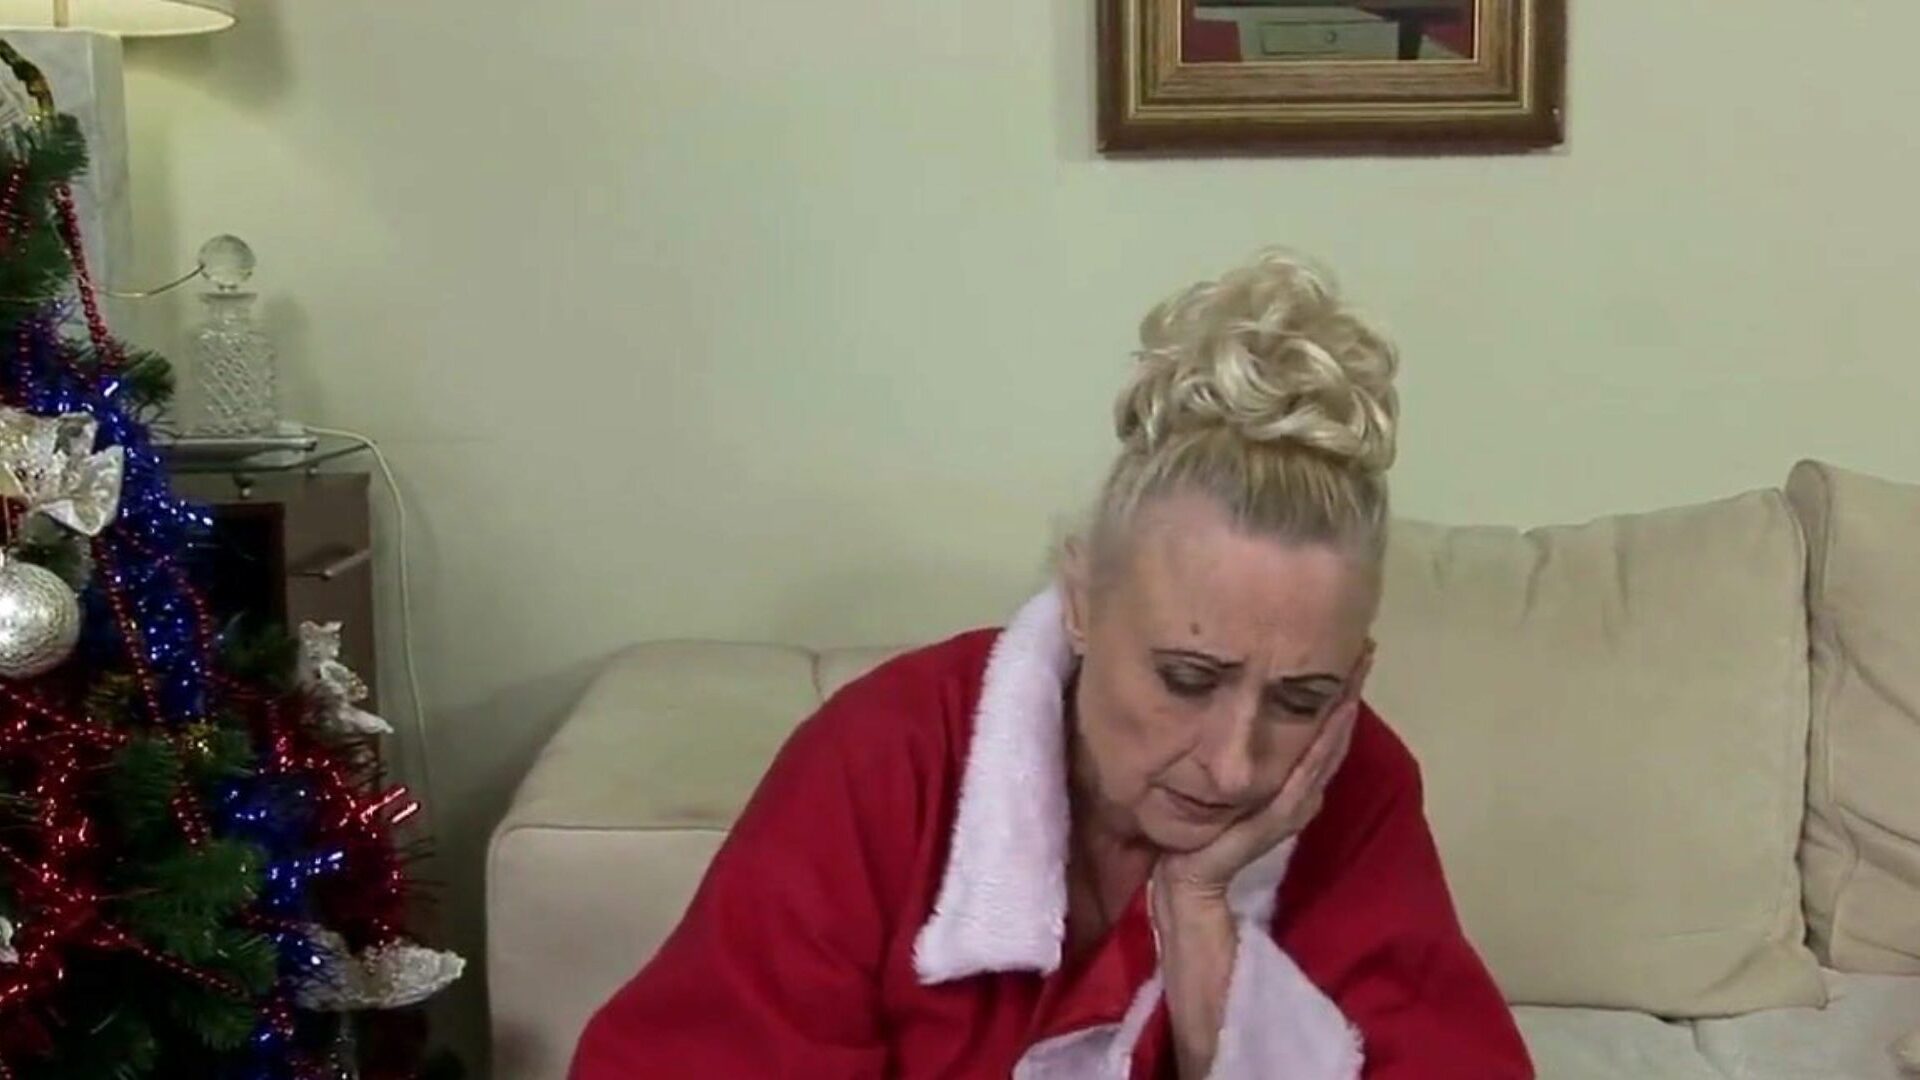 bestemor vil ikke tilbringe julen alene: gratis porno e8 se bestemor vil ikke tilbringe julen alene episode på xhamster - det ultimate arkivet med gratis bestemor og bestemor gratis kanal hd porno tube episoder